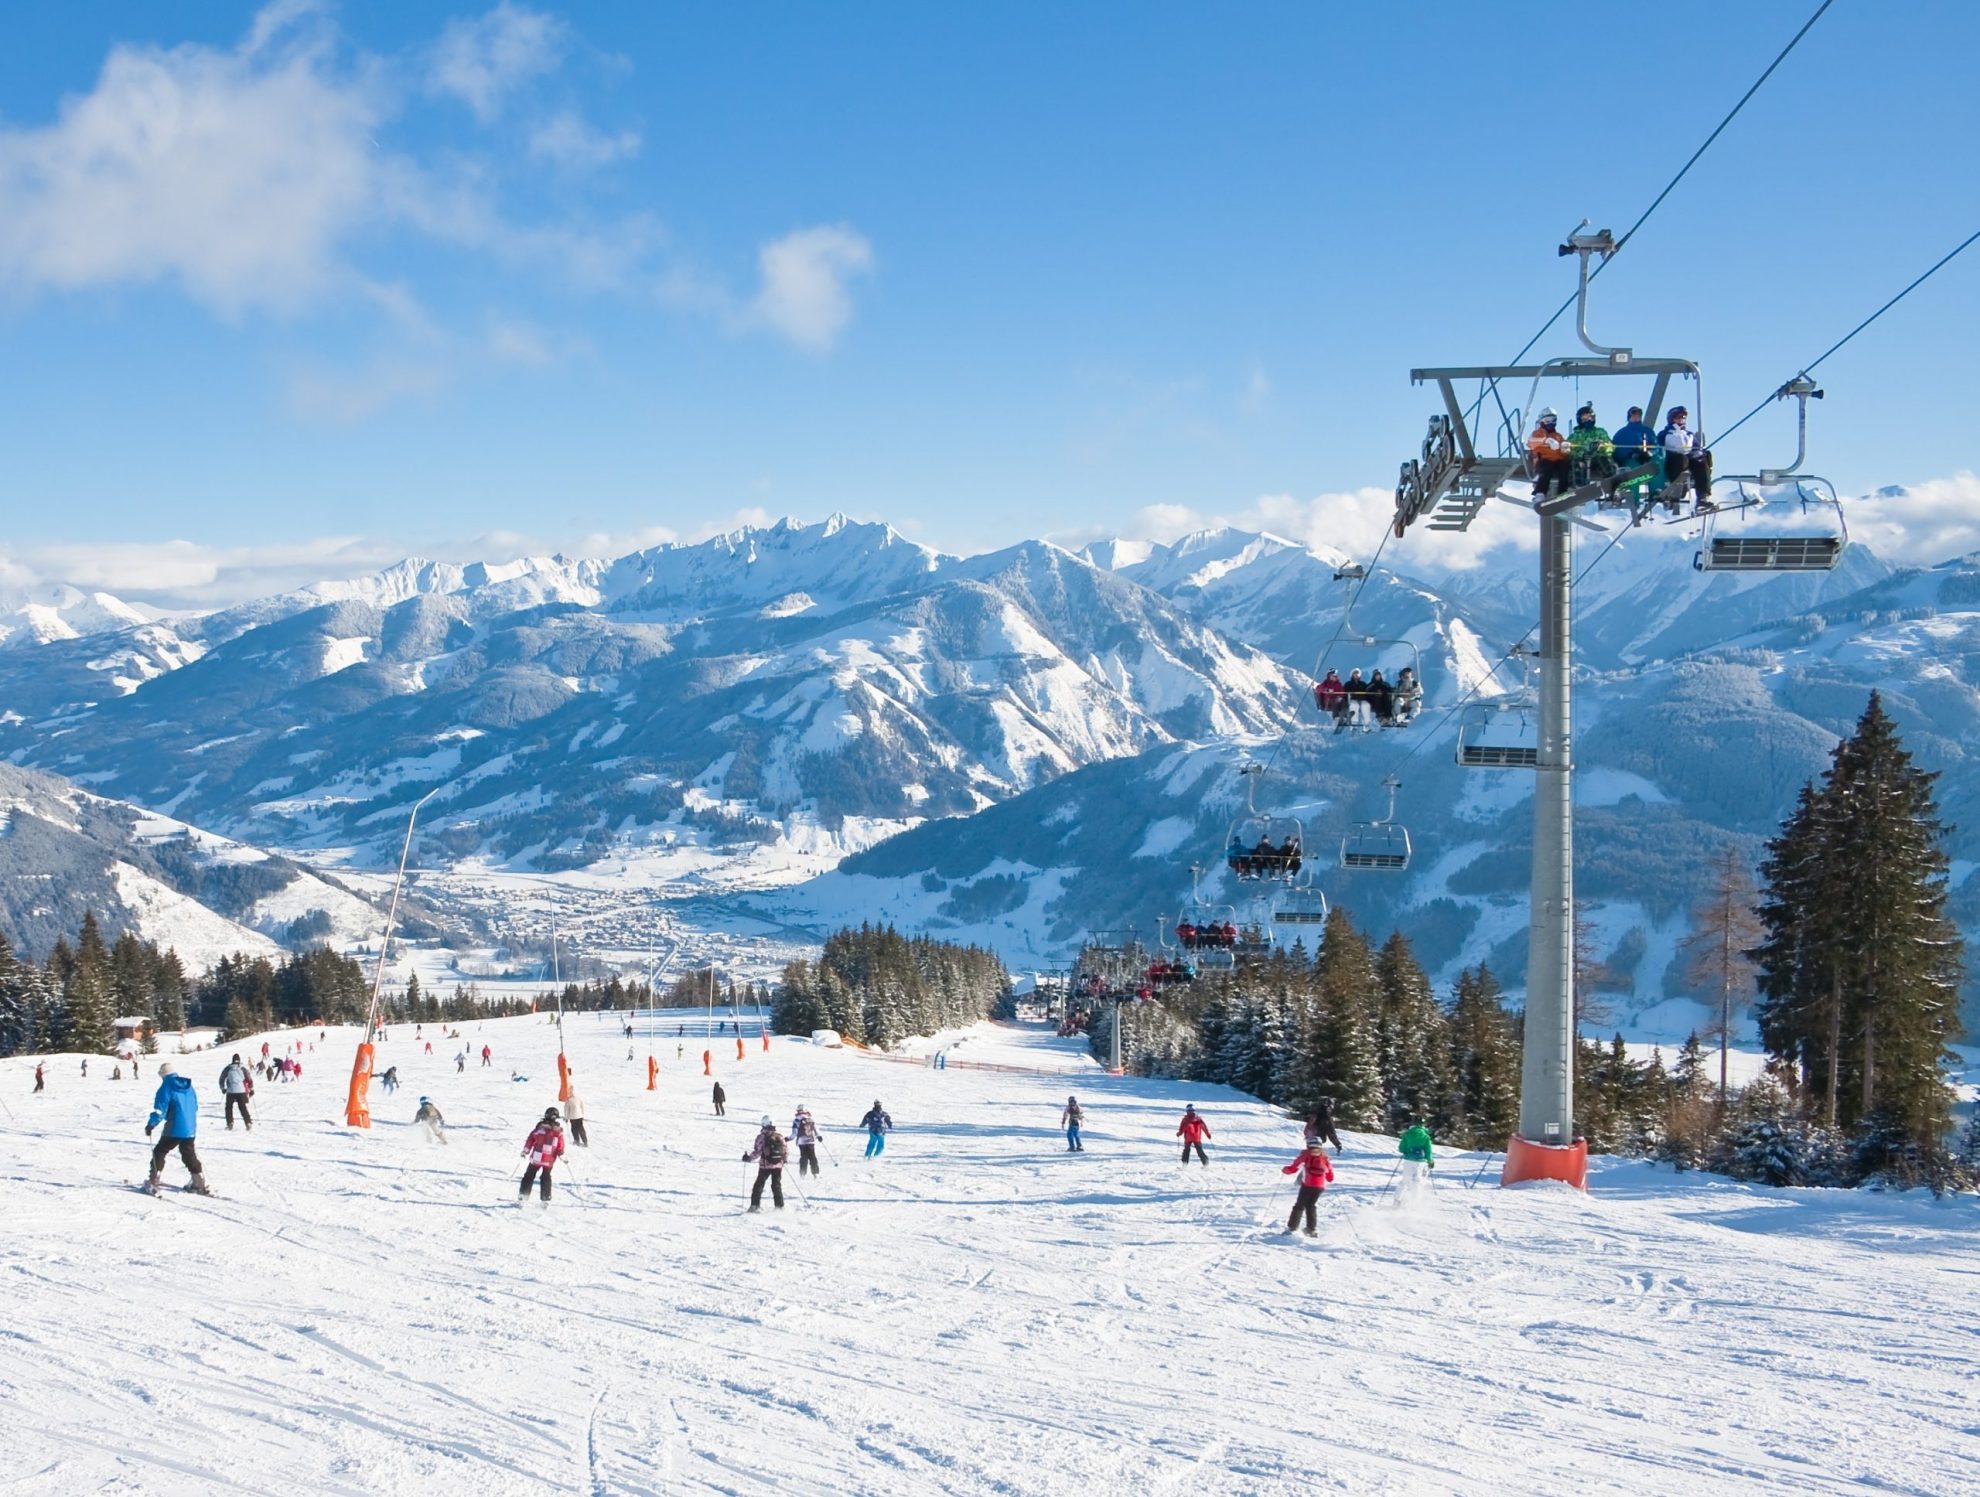 See ski. Zell am see горнолыжный курорт. Капрун горнолыжный курорт. Горные озера Австрии (цель-ам-Зее-Капрун. Капрун зима.